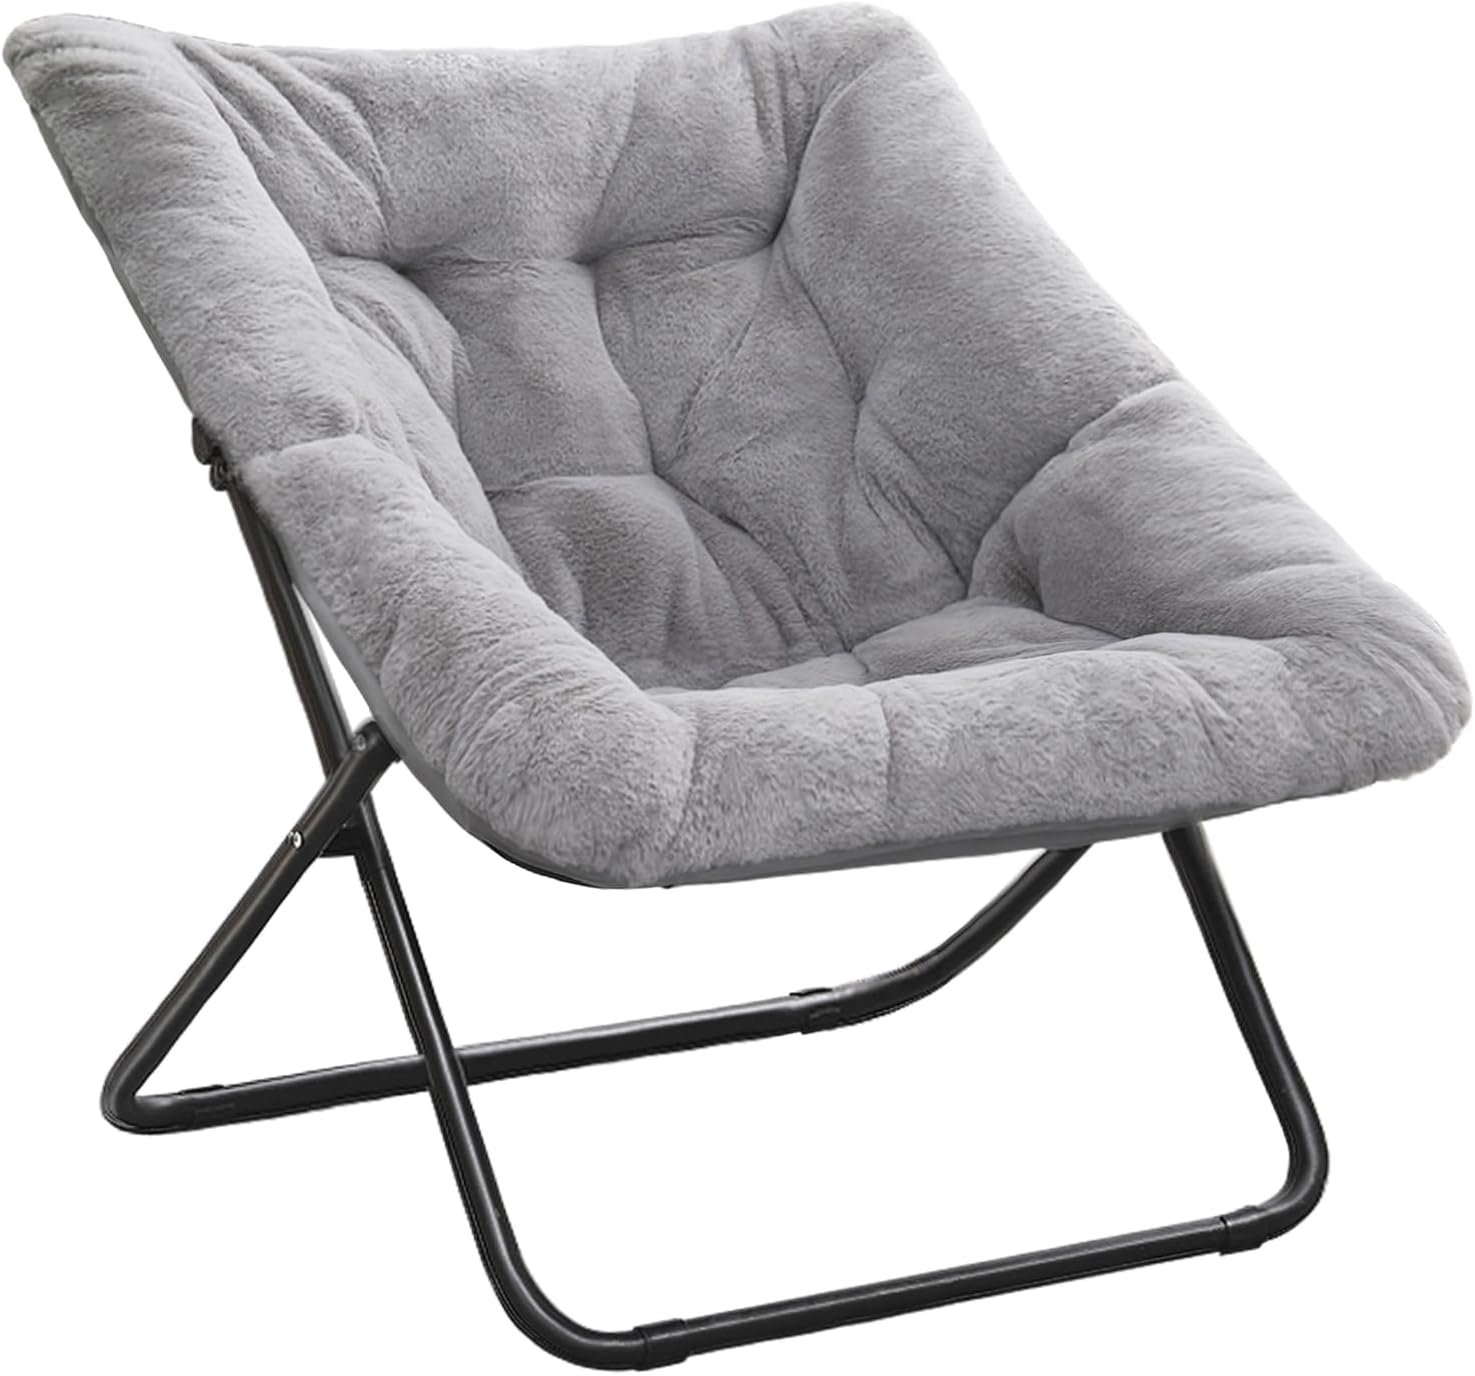 Tiita Comfy Saucer Chair Review